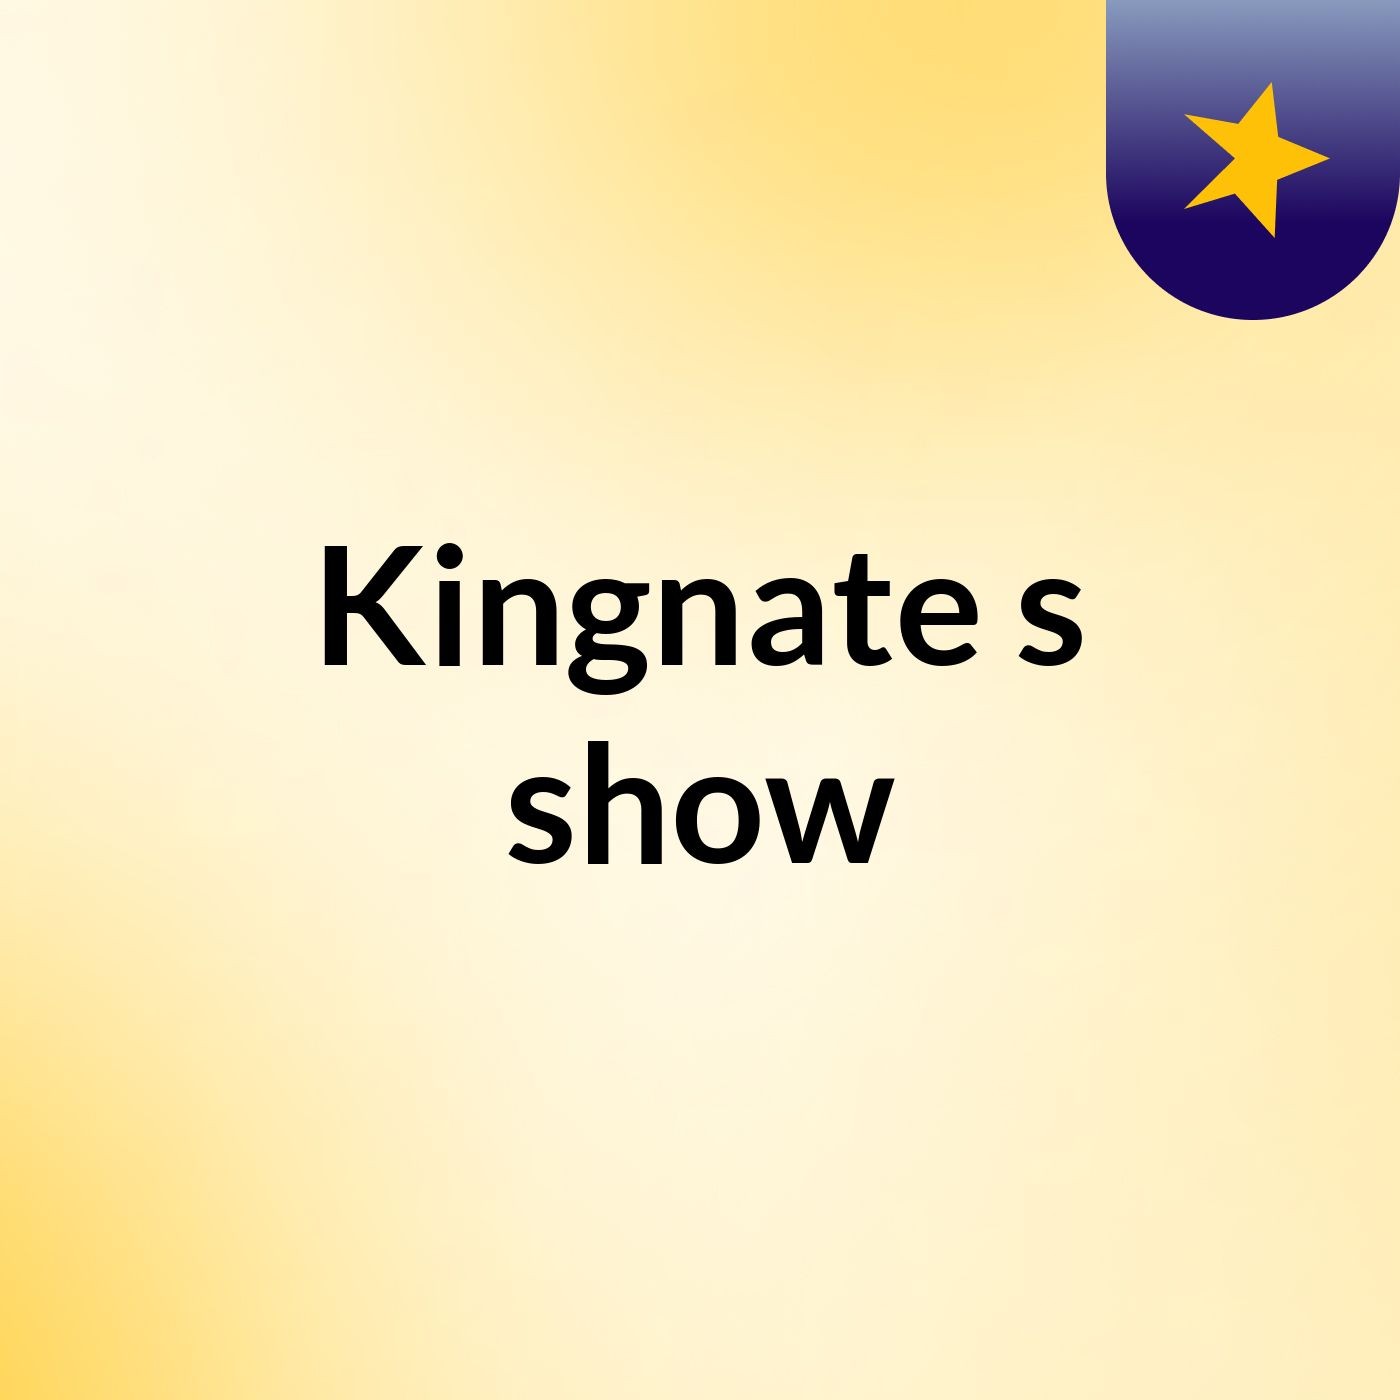 Kingnate's show